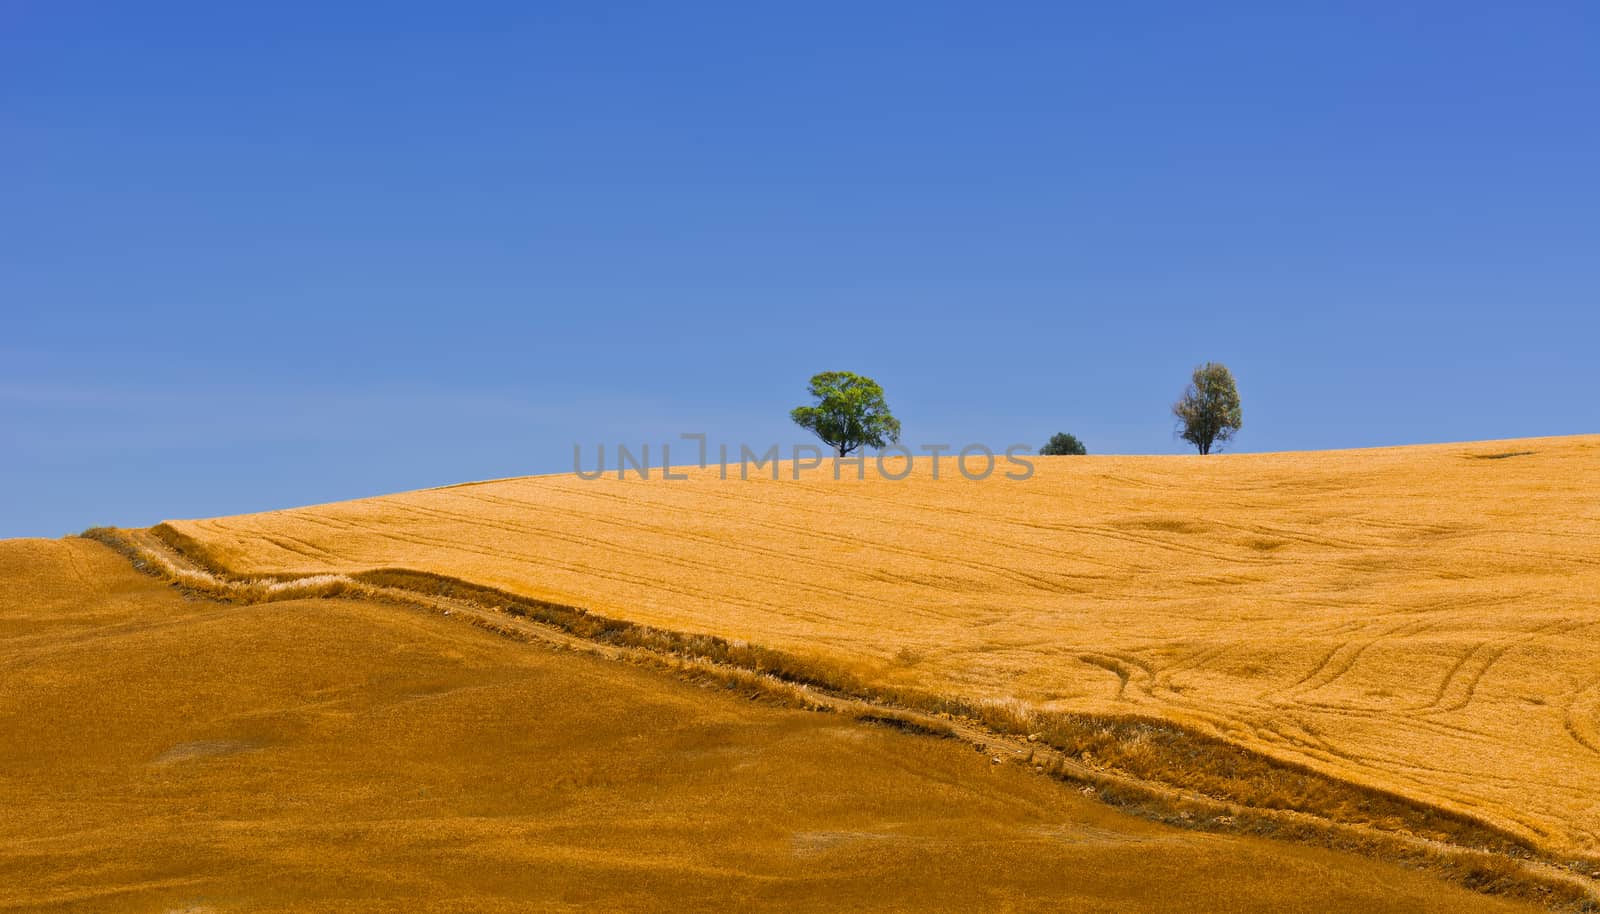 Wheat Fields by gkuna